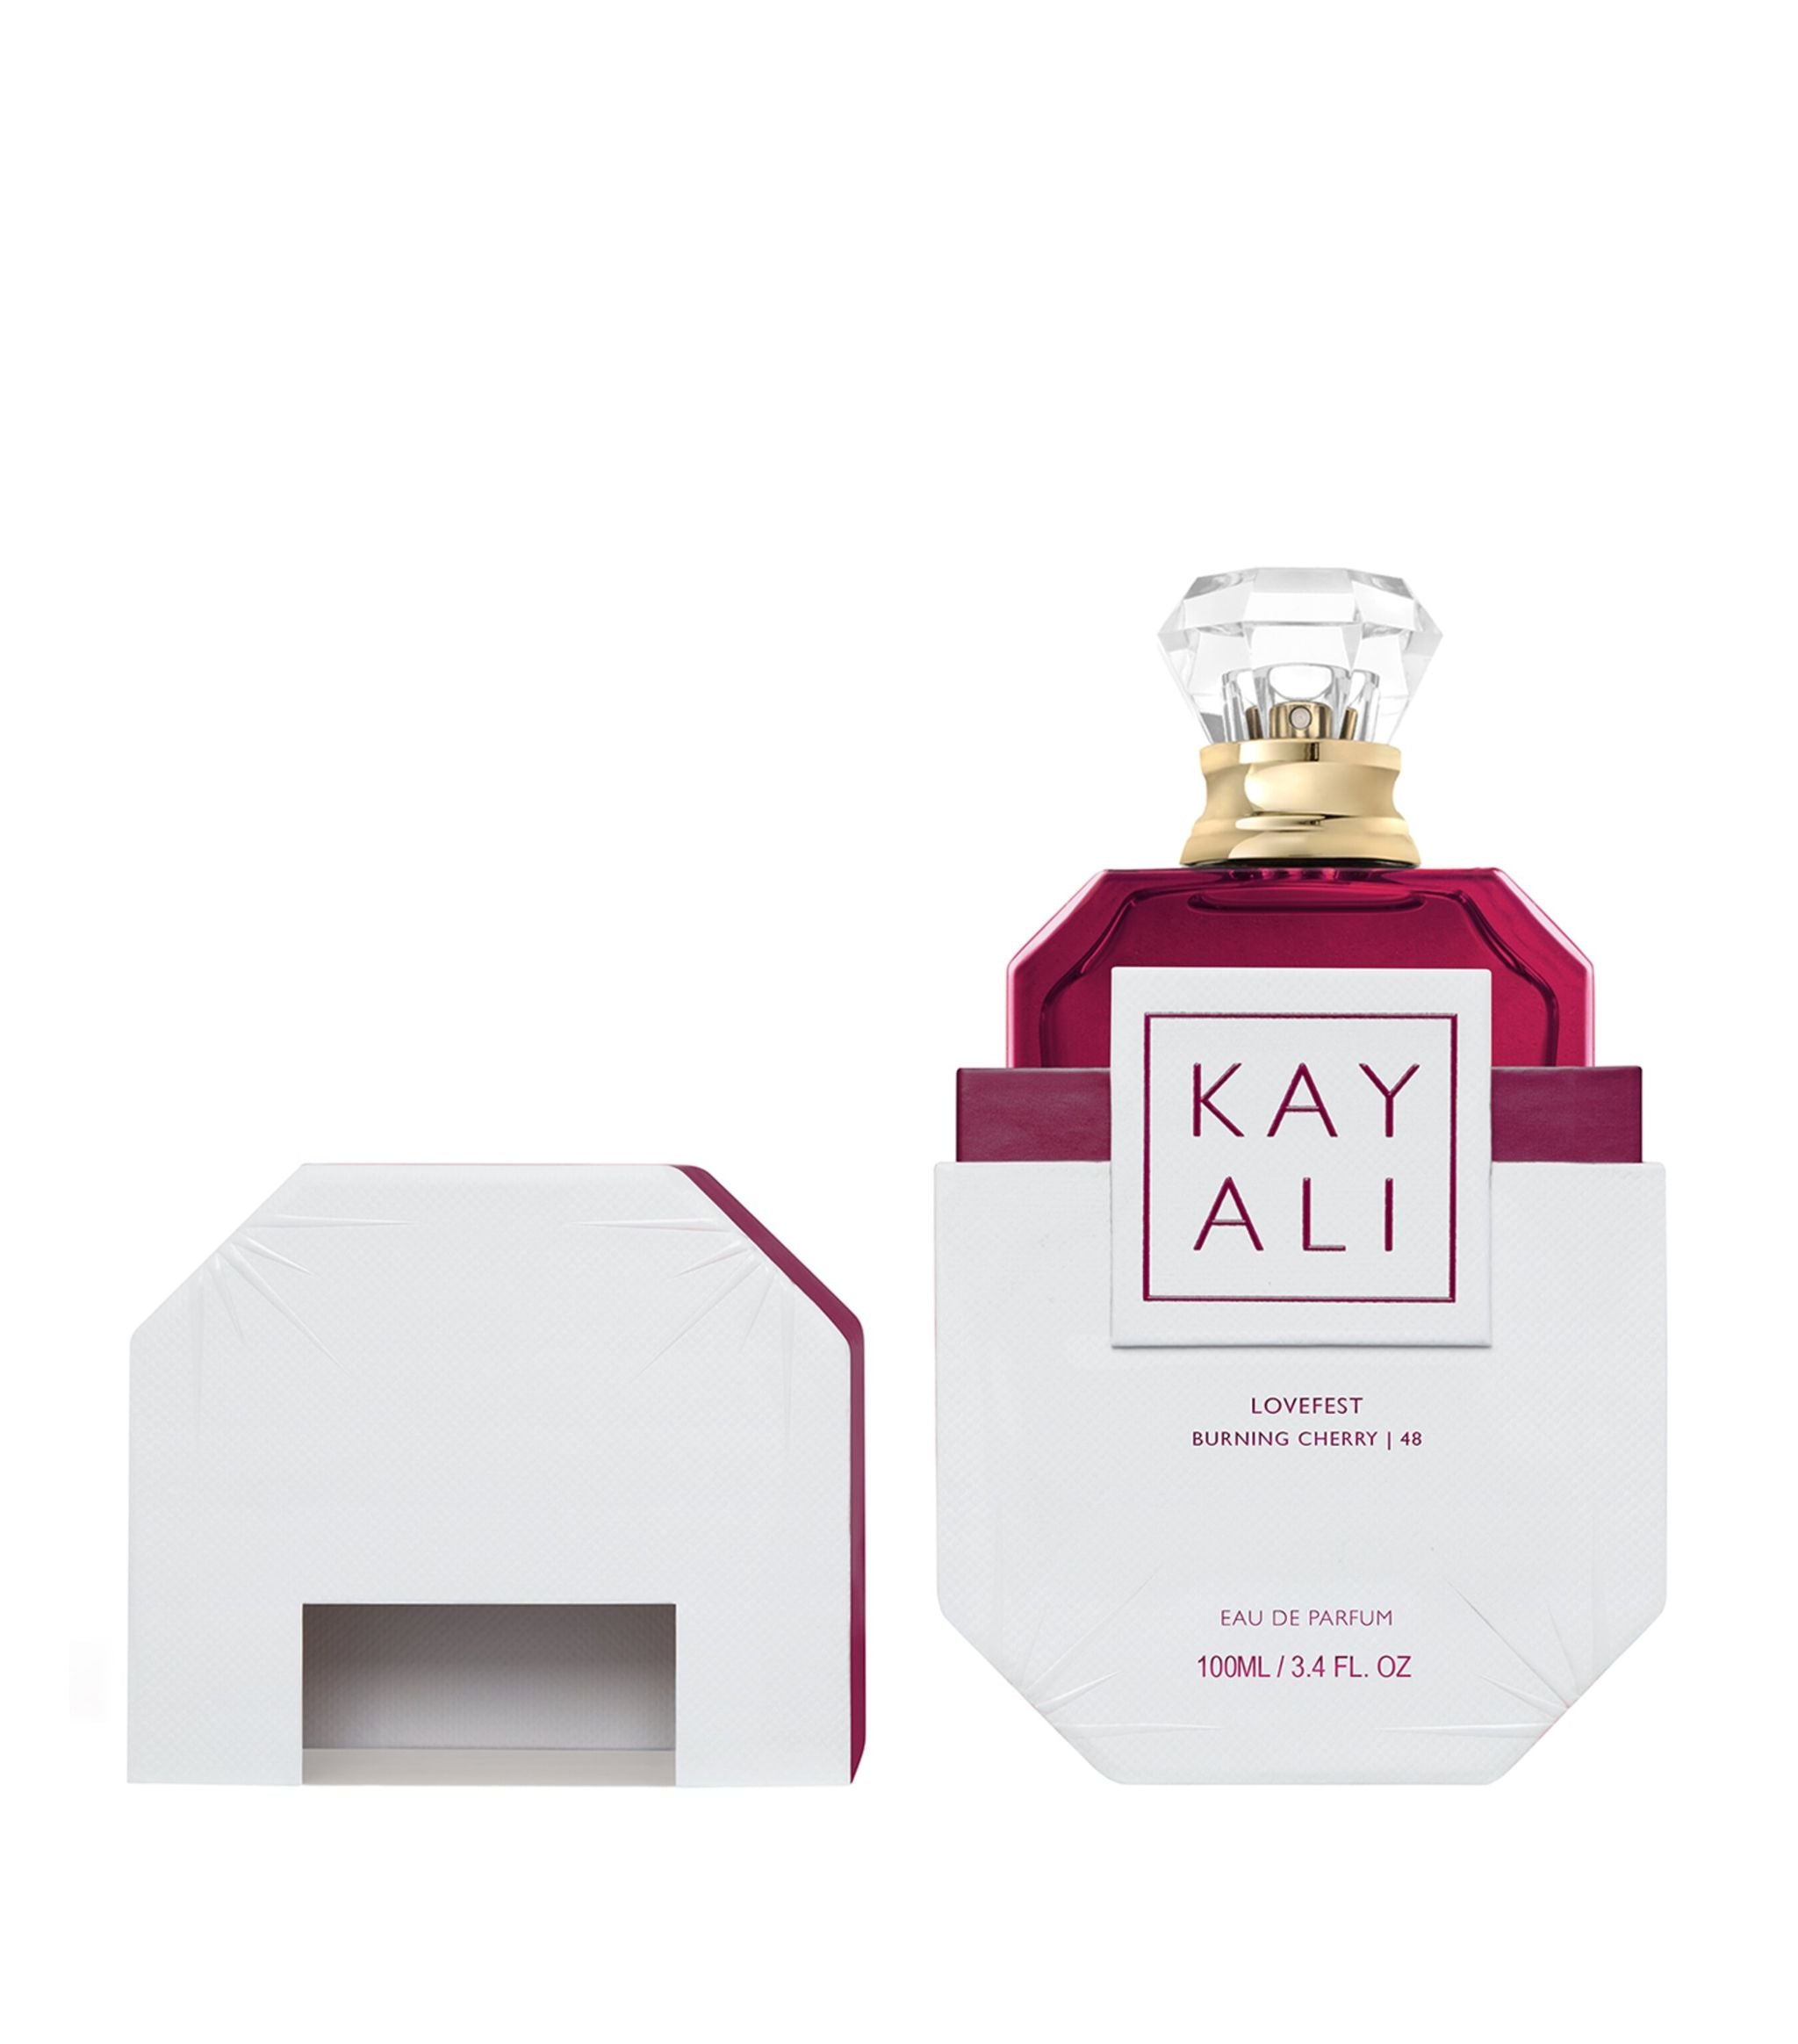 Kayali LoveFest Burning Cherry 48 Eau de Parfum (100ml)